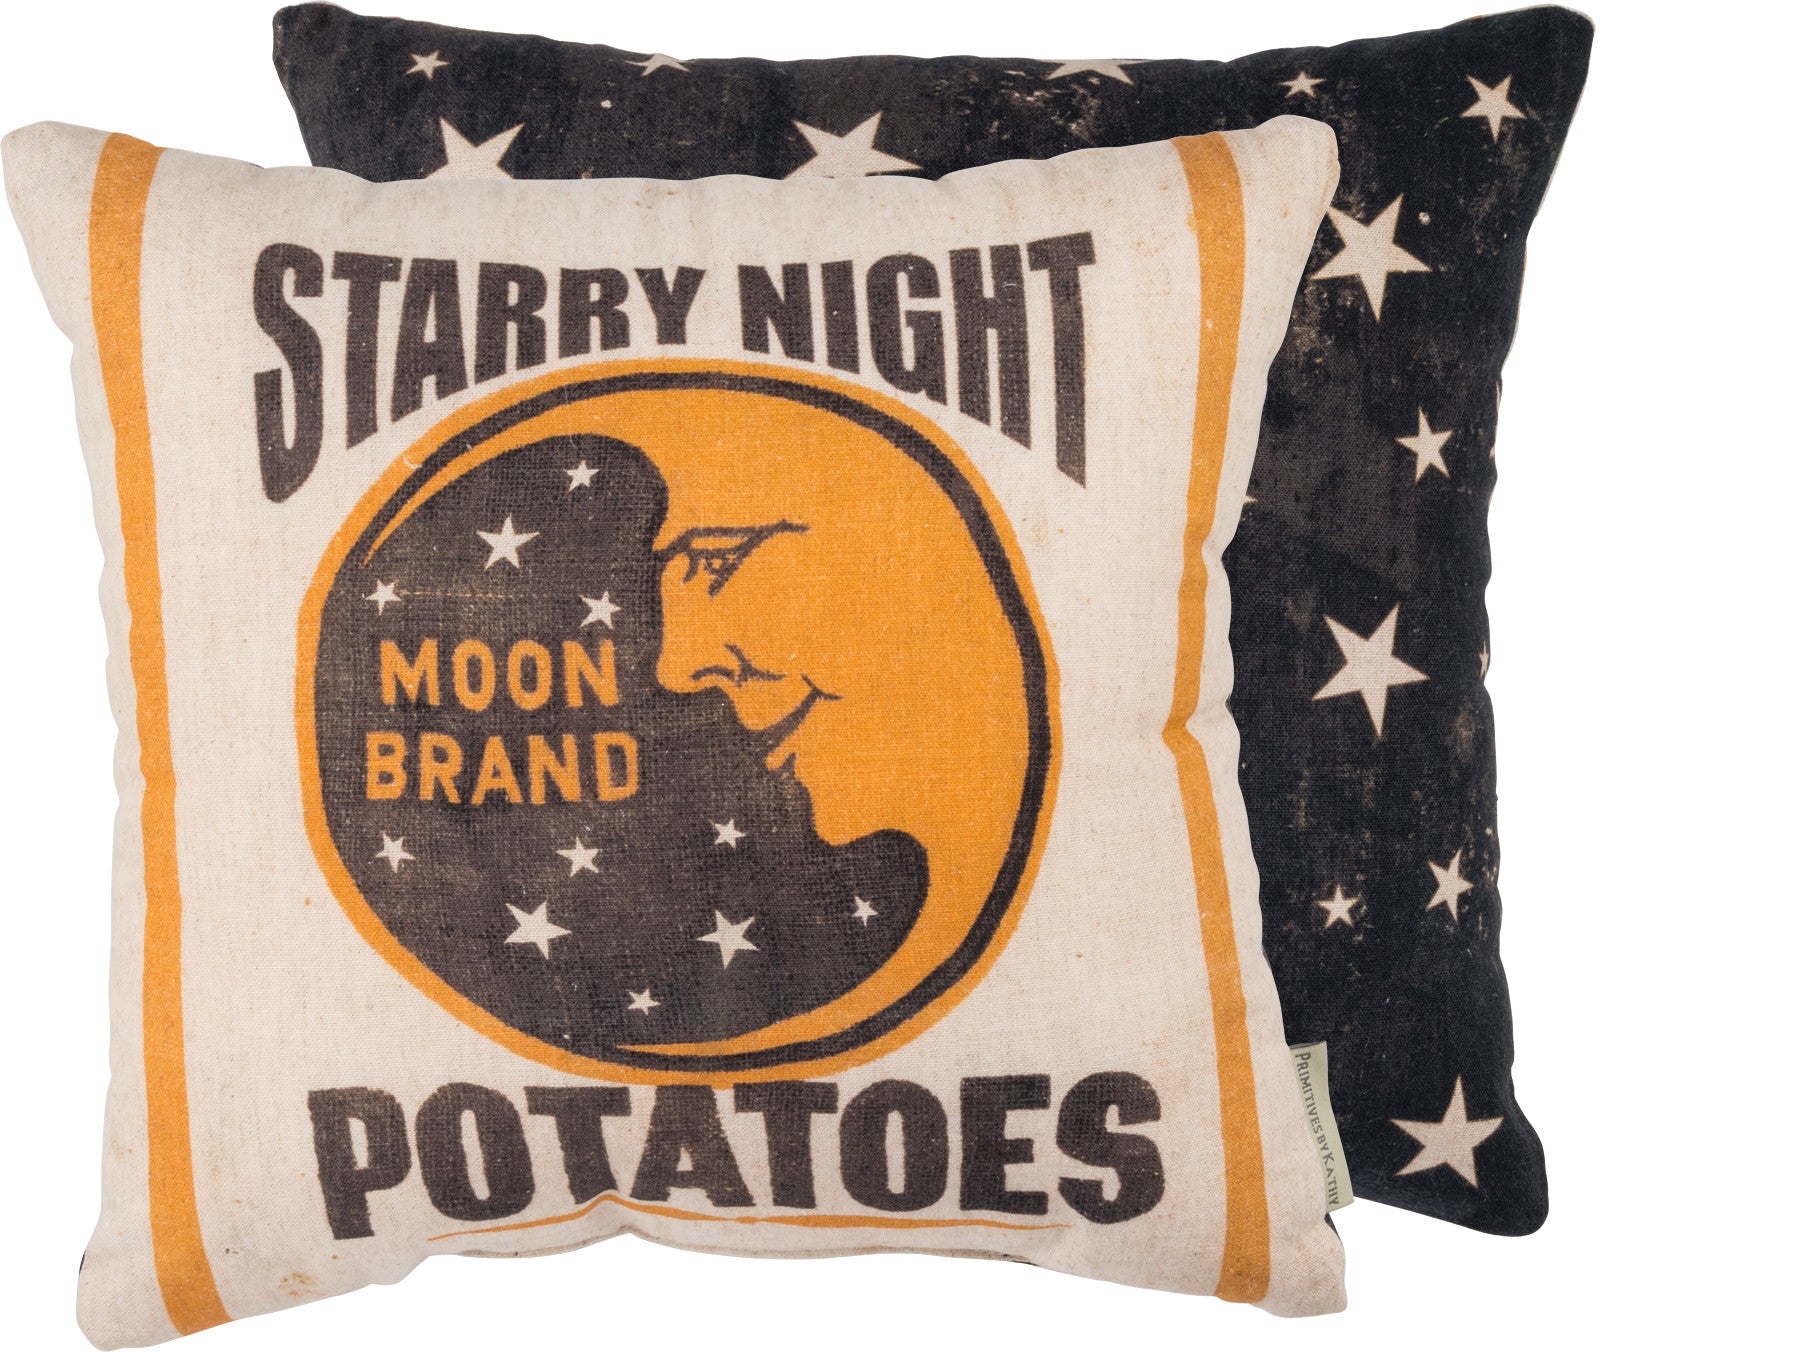 Starry Night Moon Pillow - Vintage Halloween Crescent